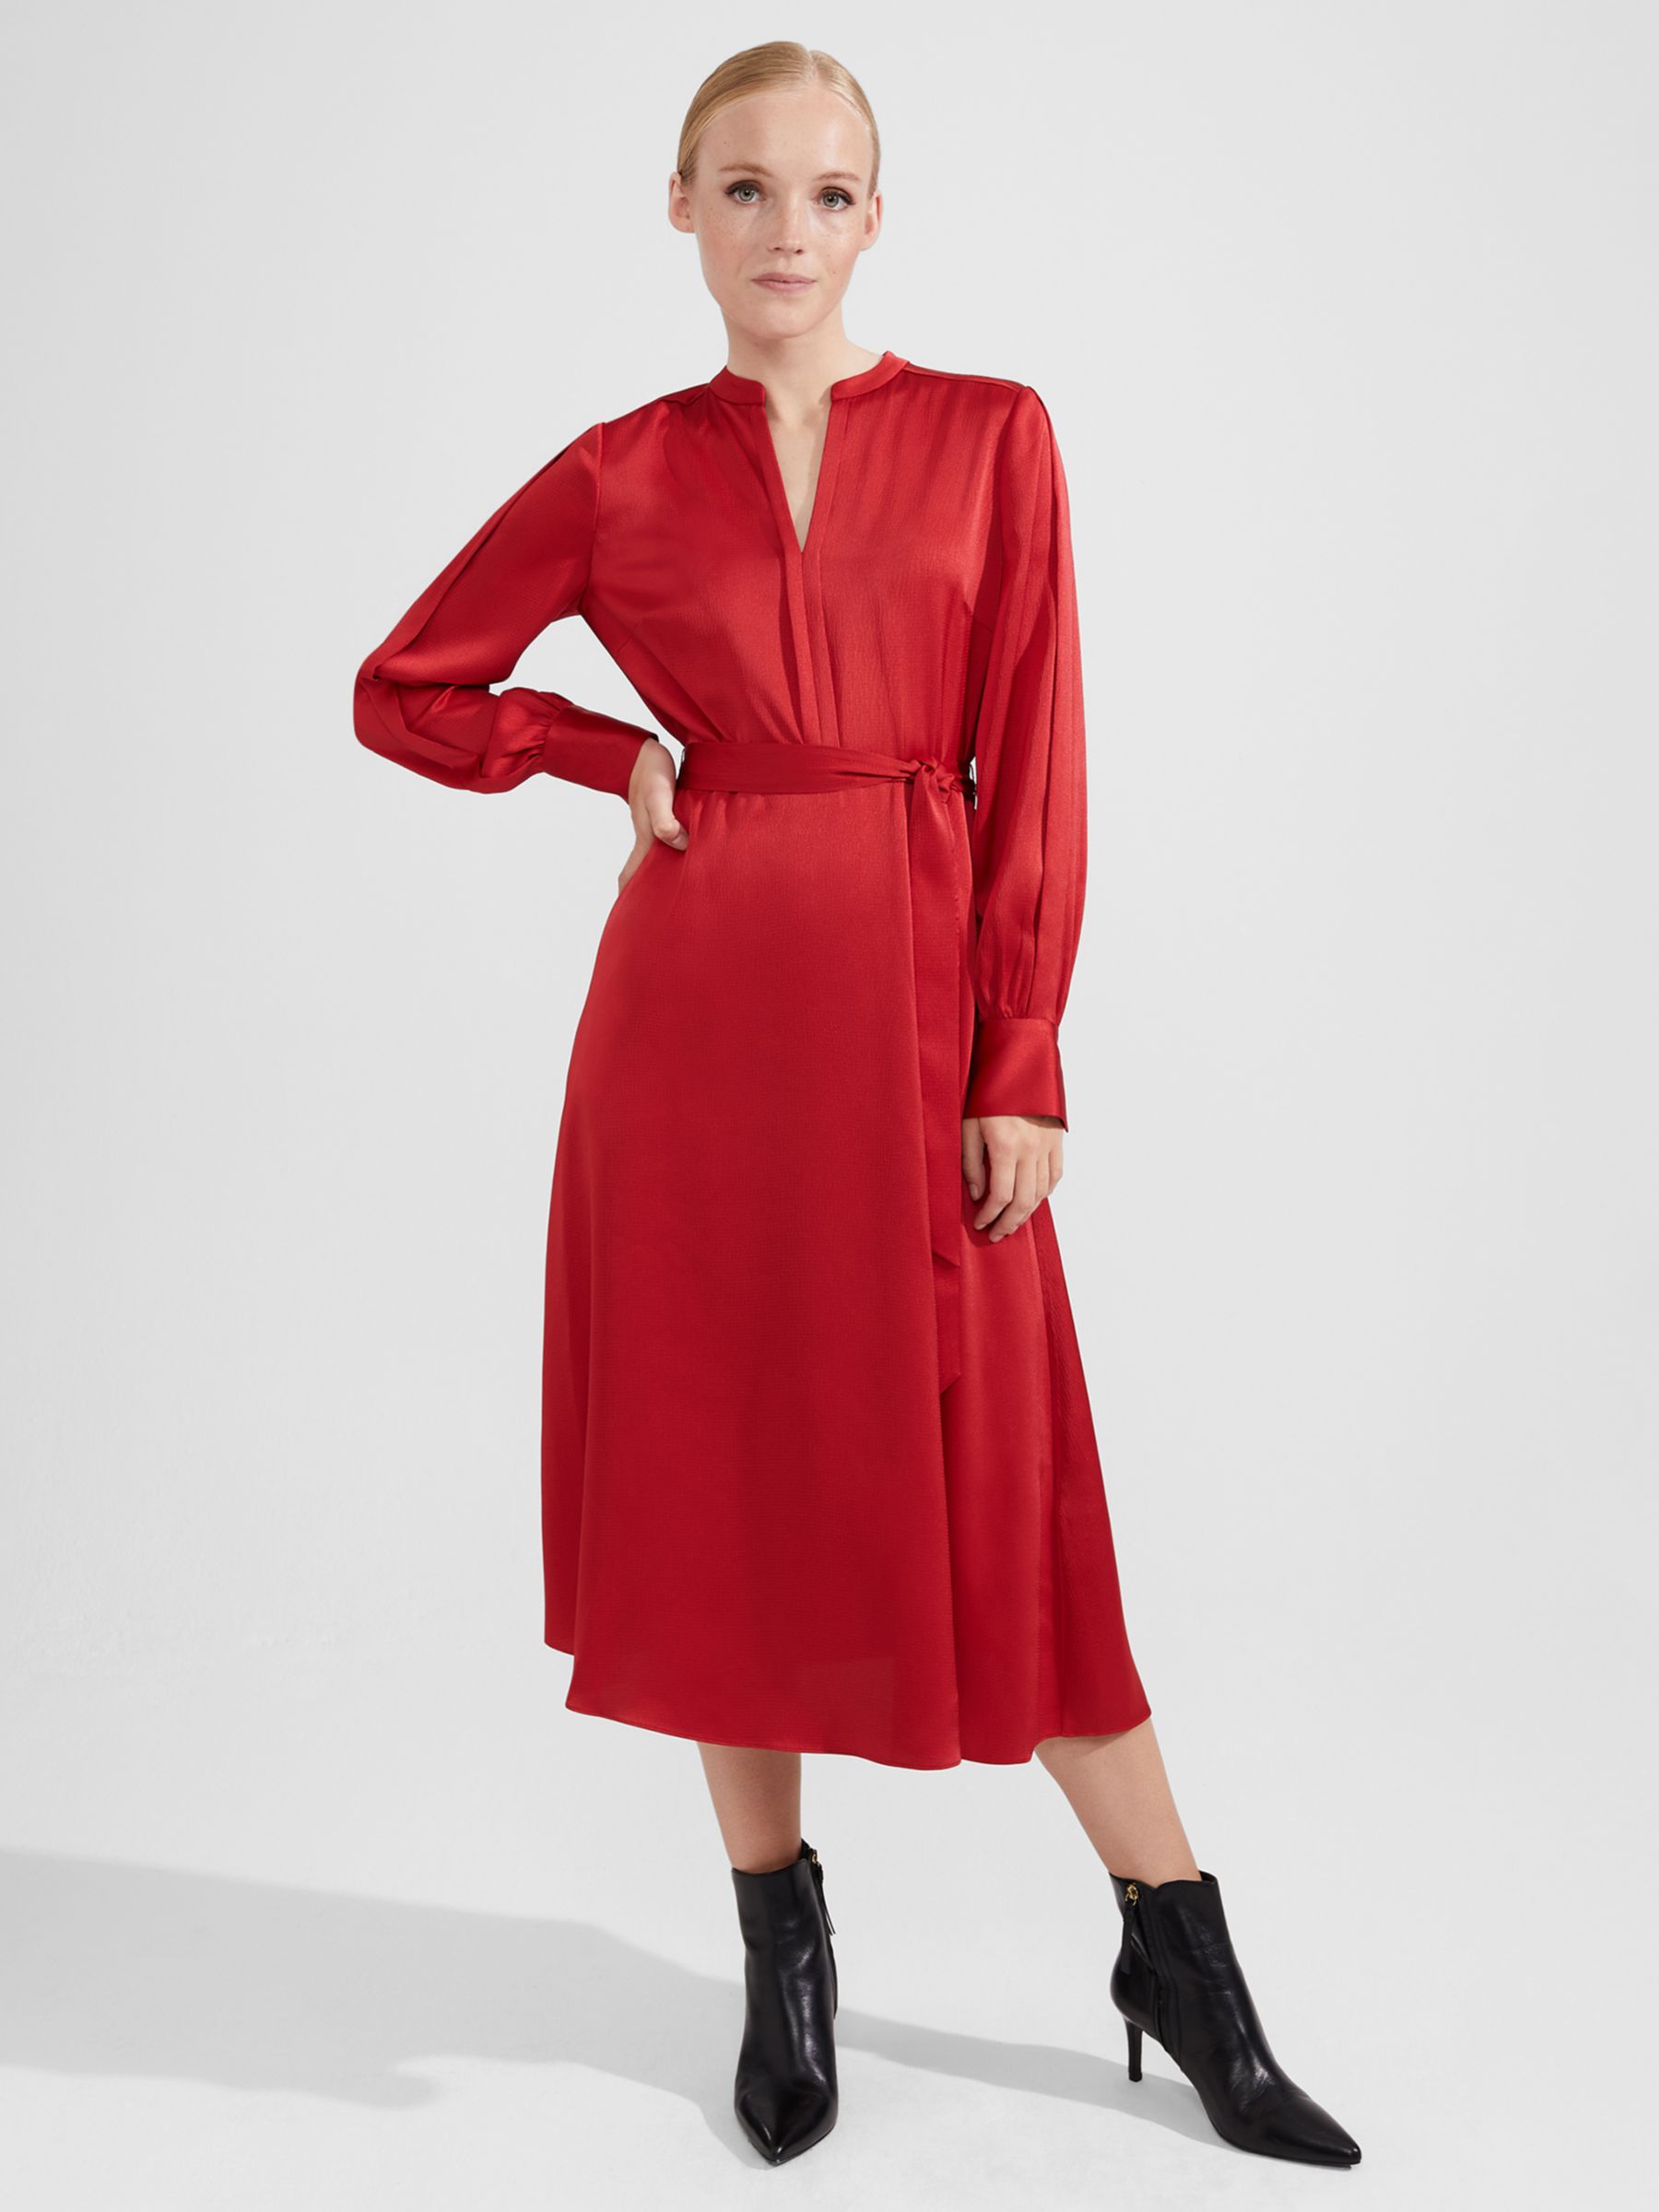 Hobbs Arlette Satin Midi Dress, Currant Red at John Lewis & Partners